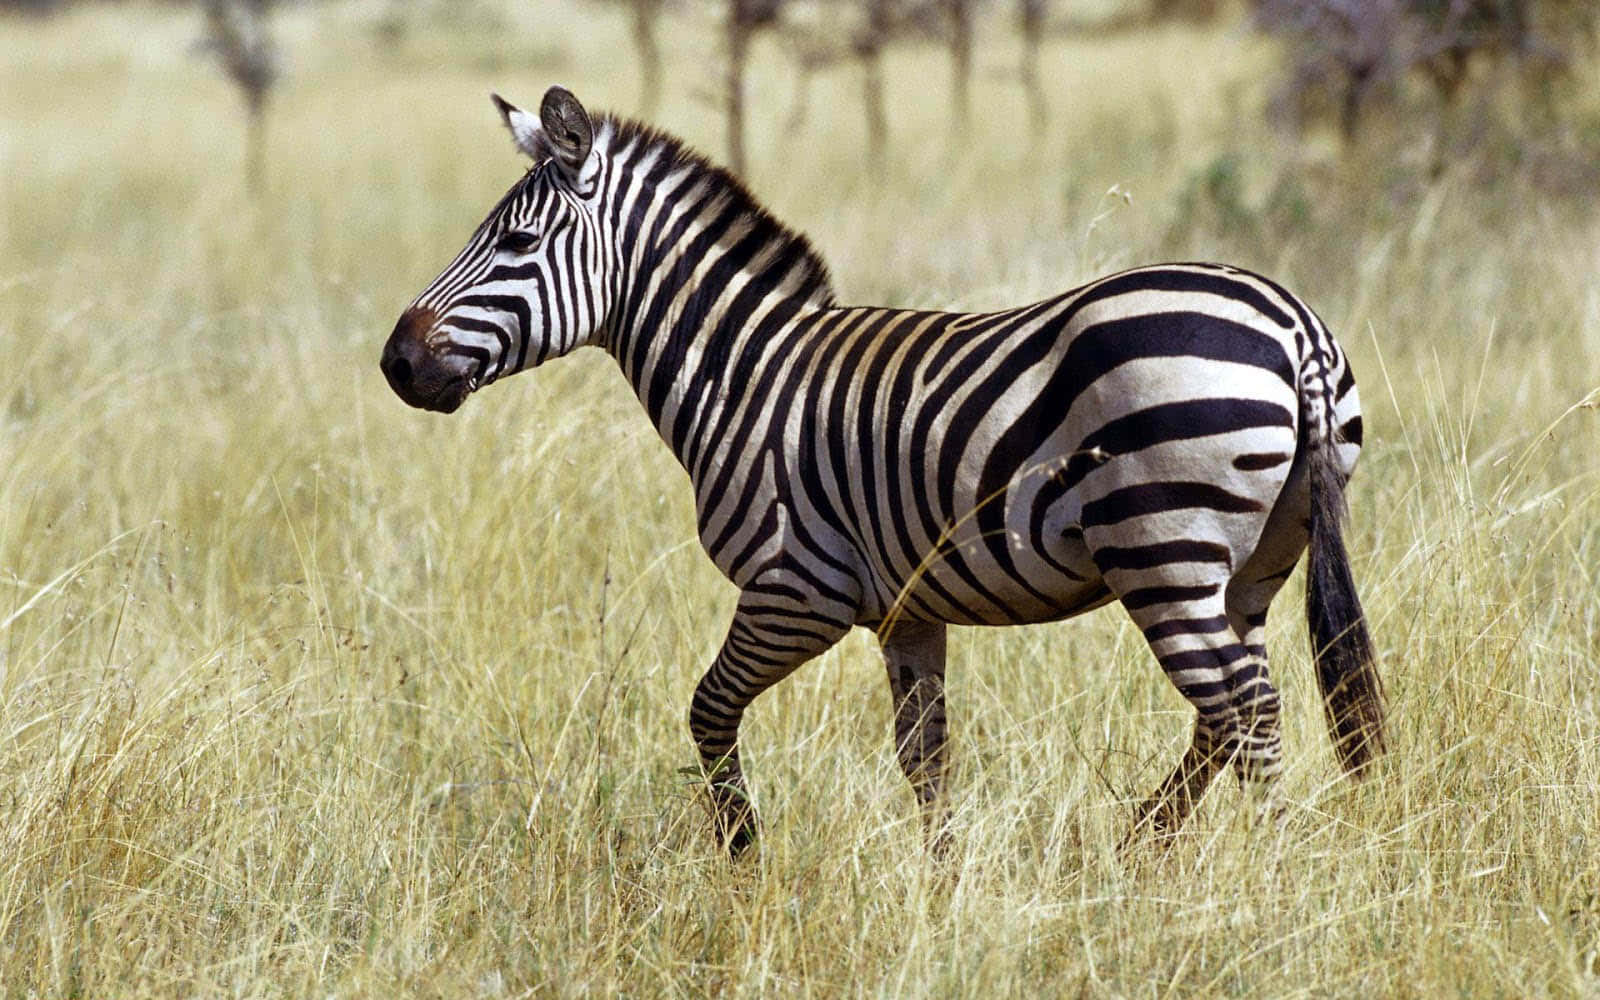 A Black and White Striped Zebra